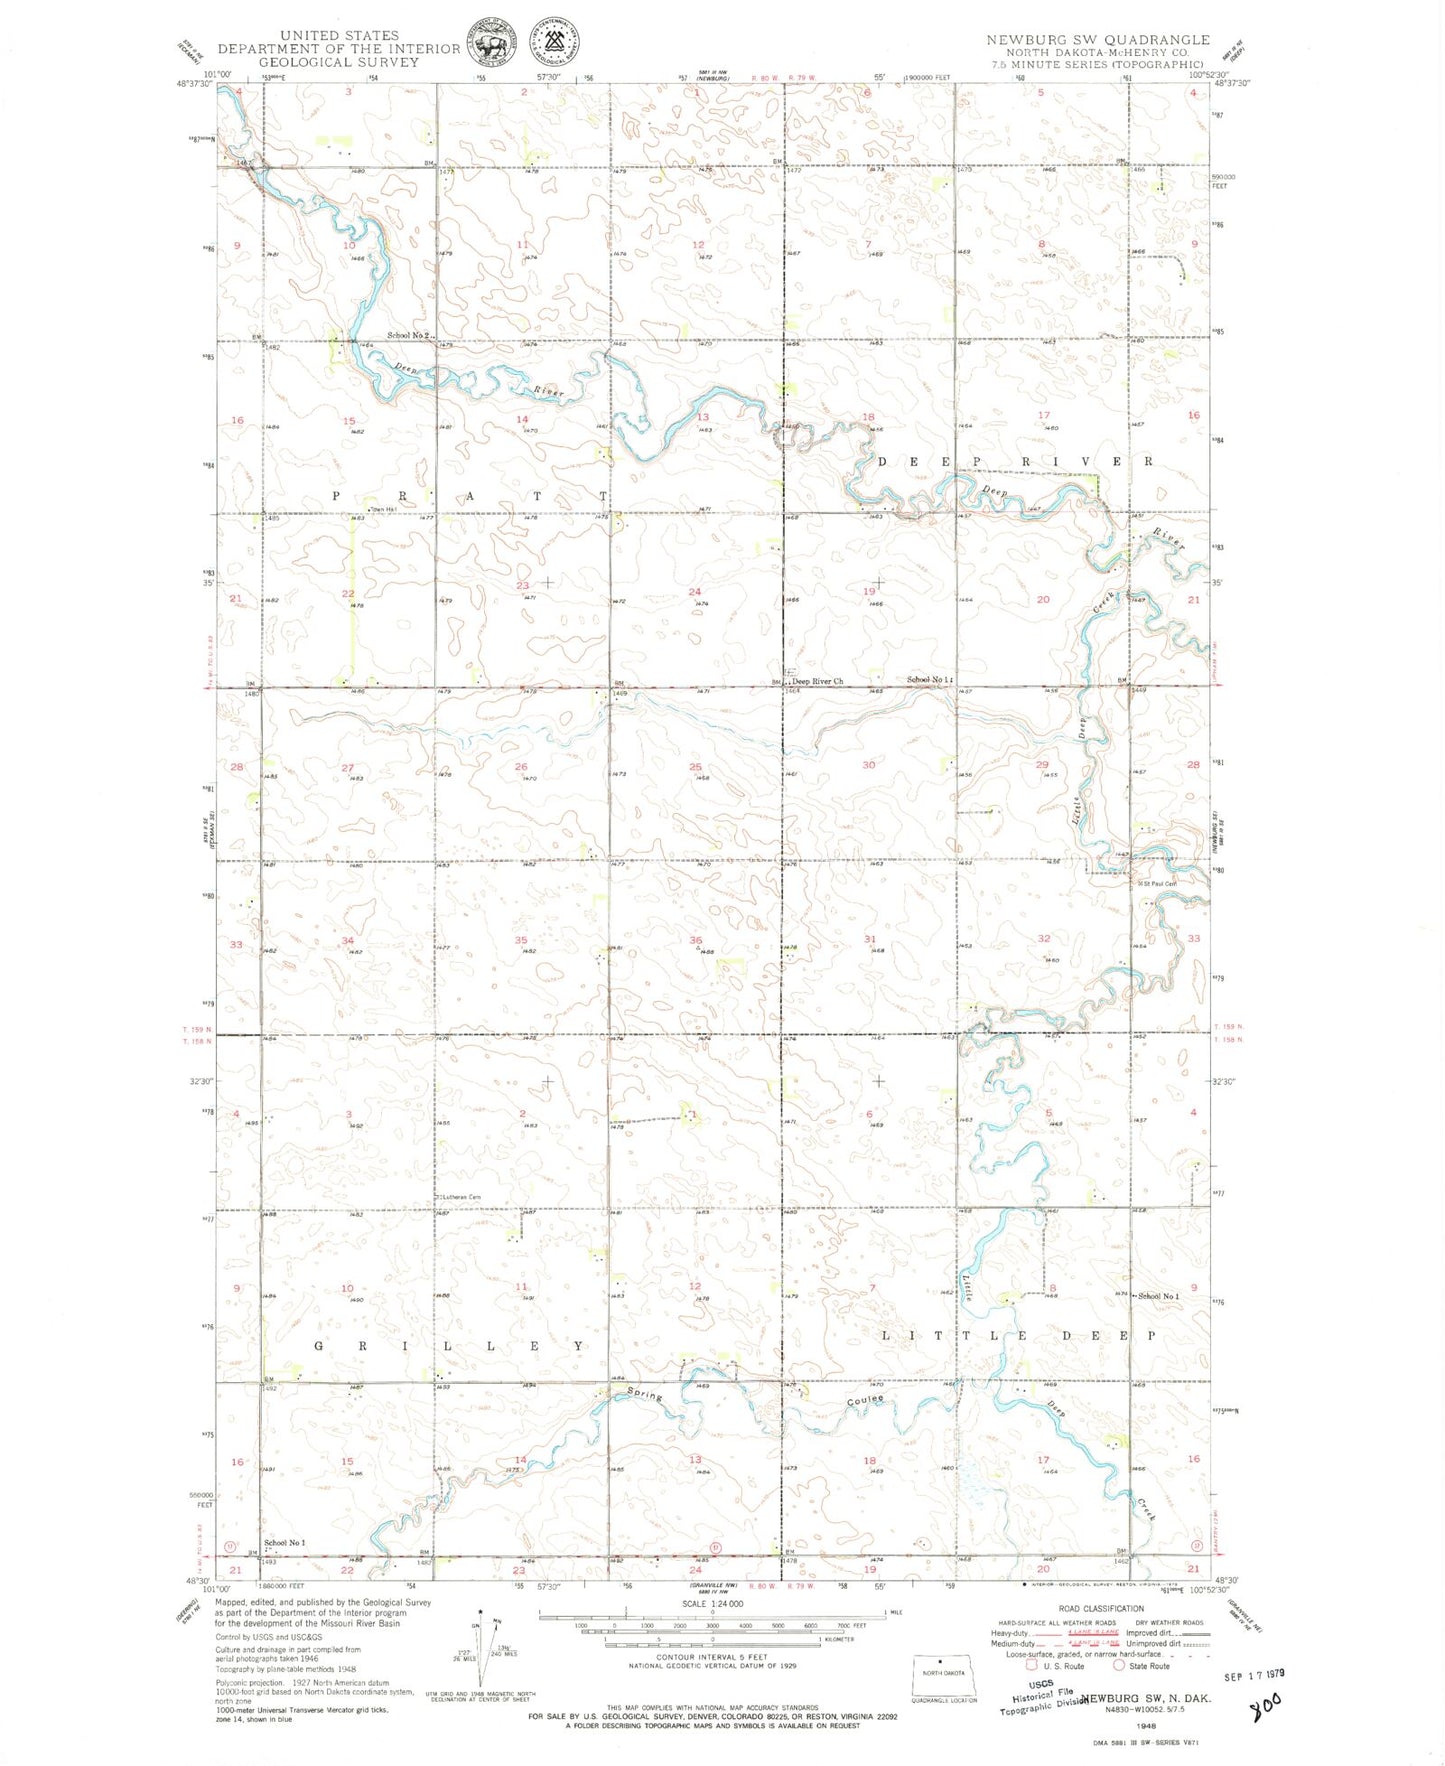 Classic USGS Newburg SW North Dakota 7.5'x7.5' Topo Map Image